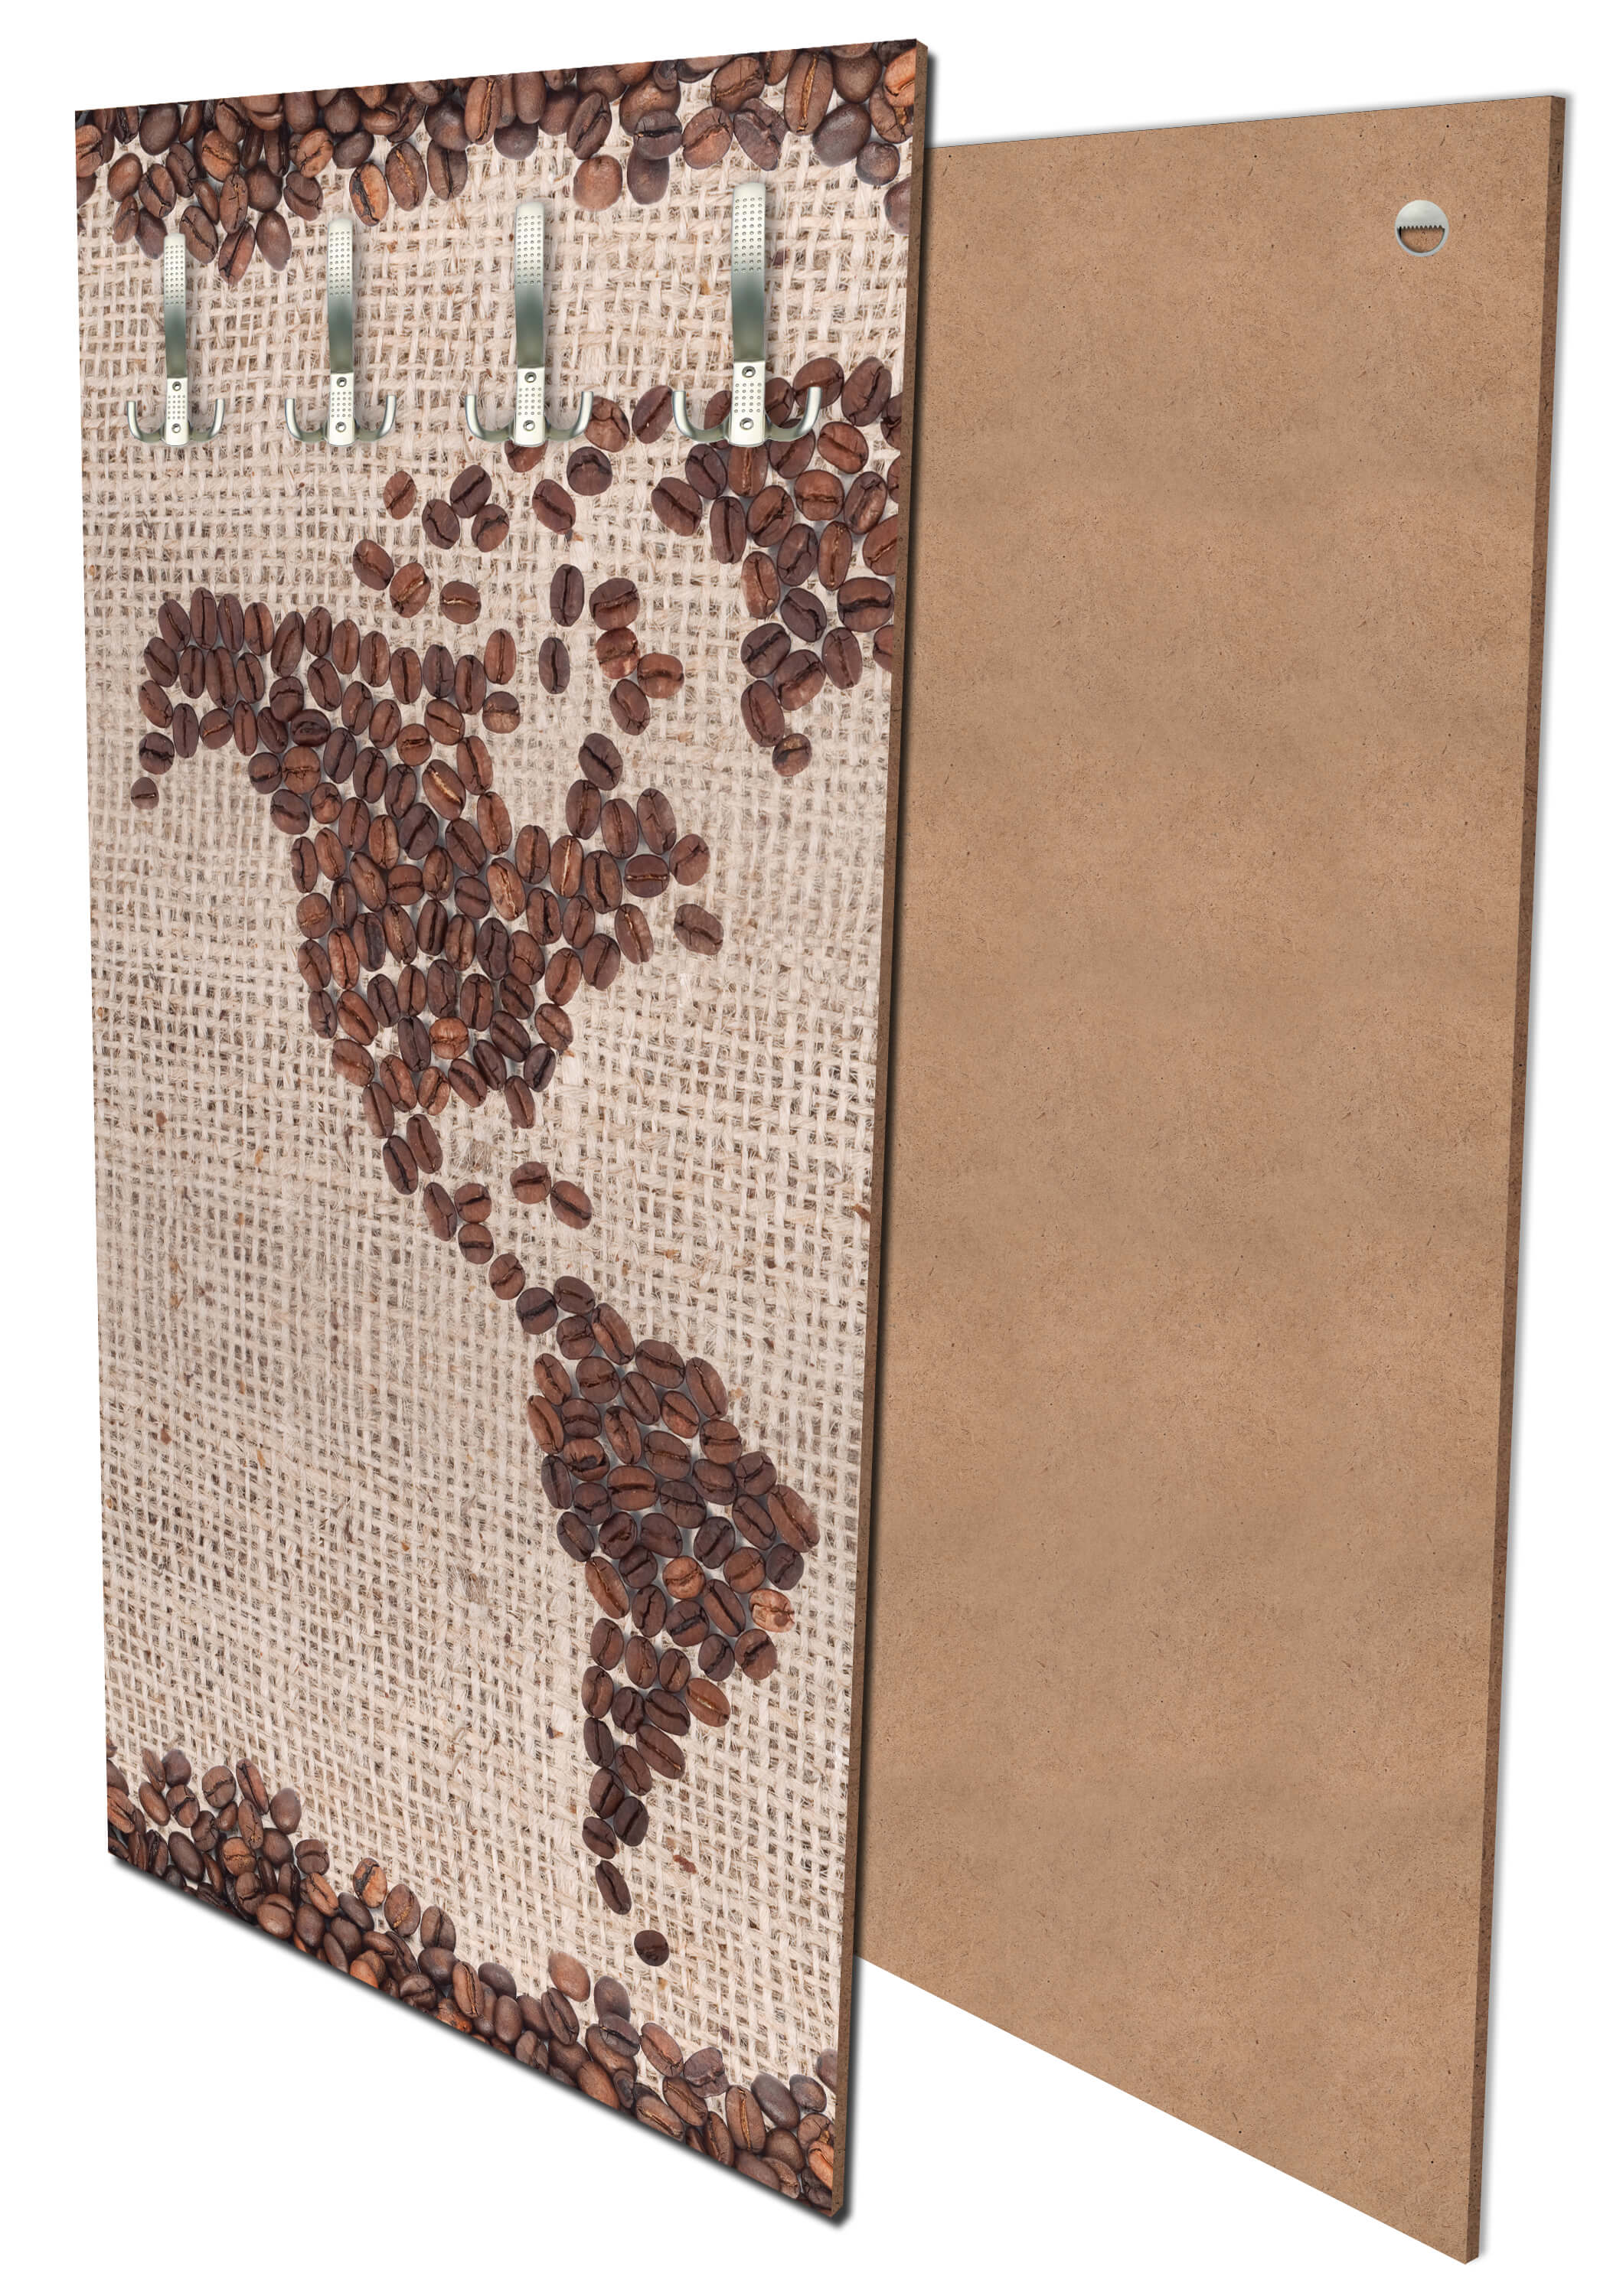 Garderobe Weltkarte Kaffee M0012 entdecken - Bild 1